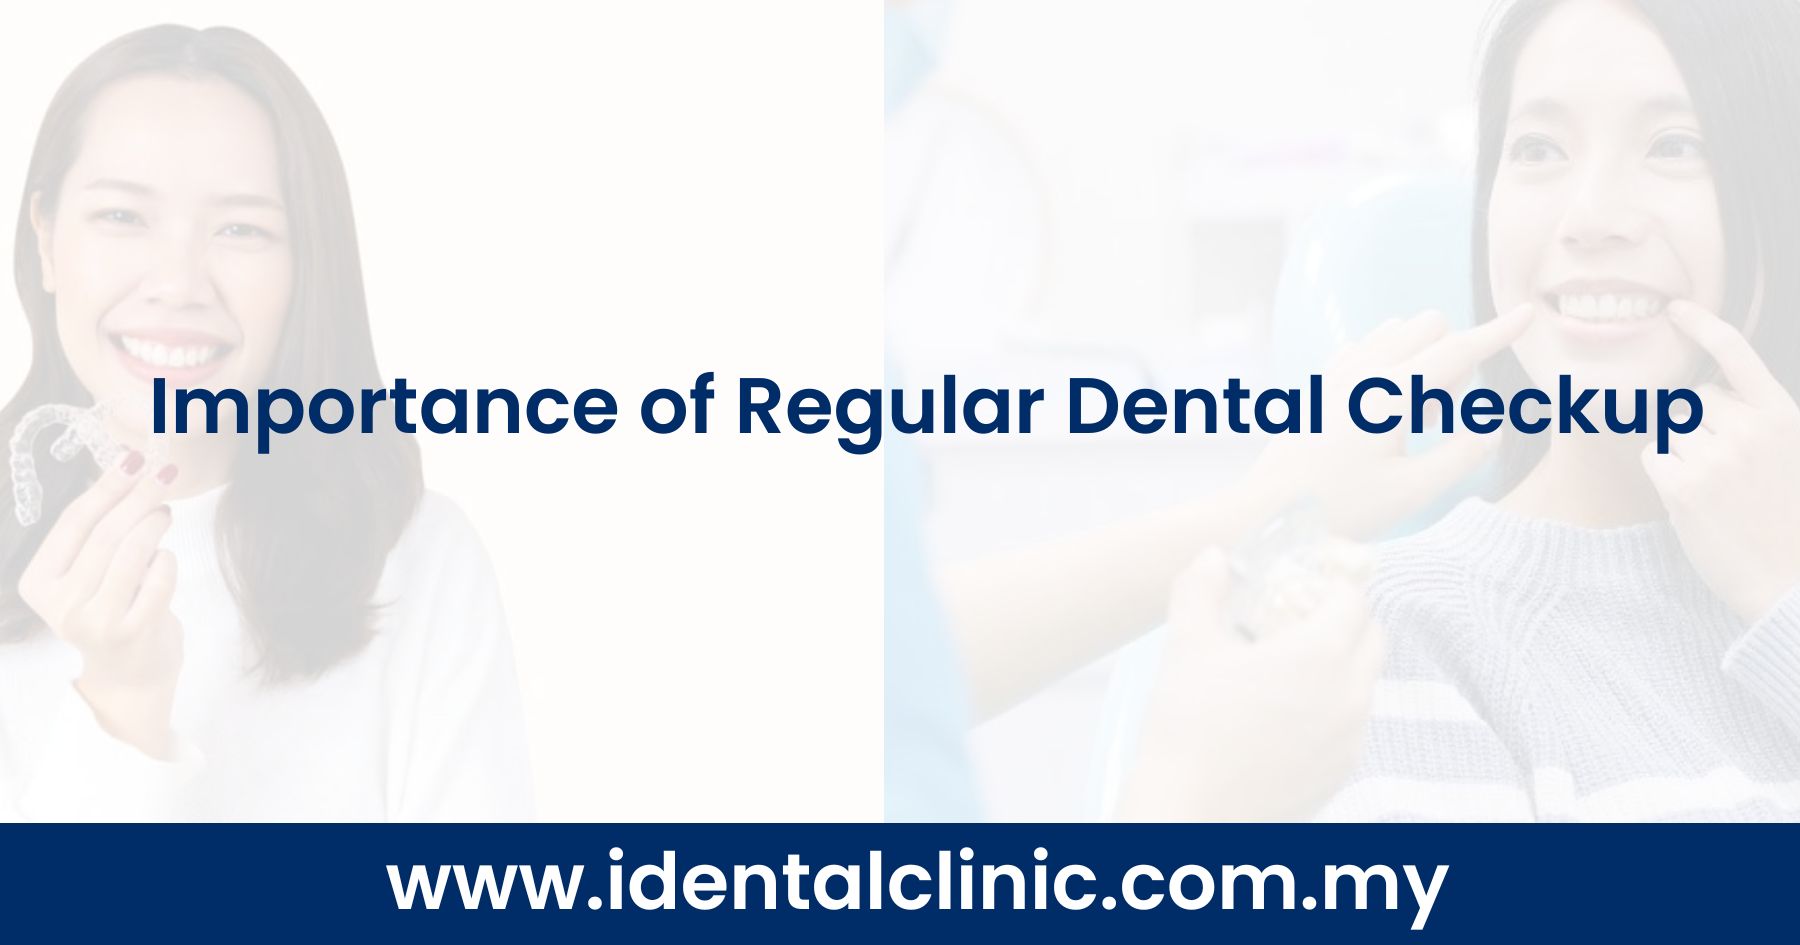 Importance of Regular Dental Checkup